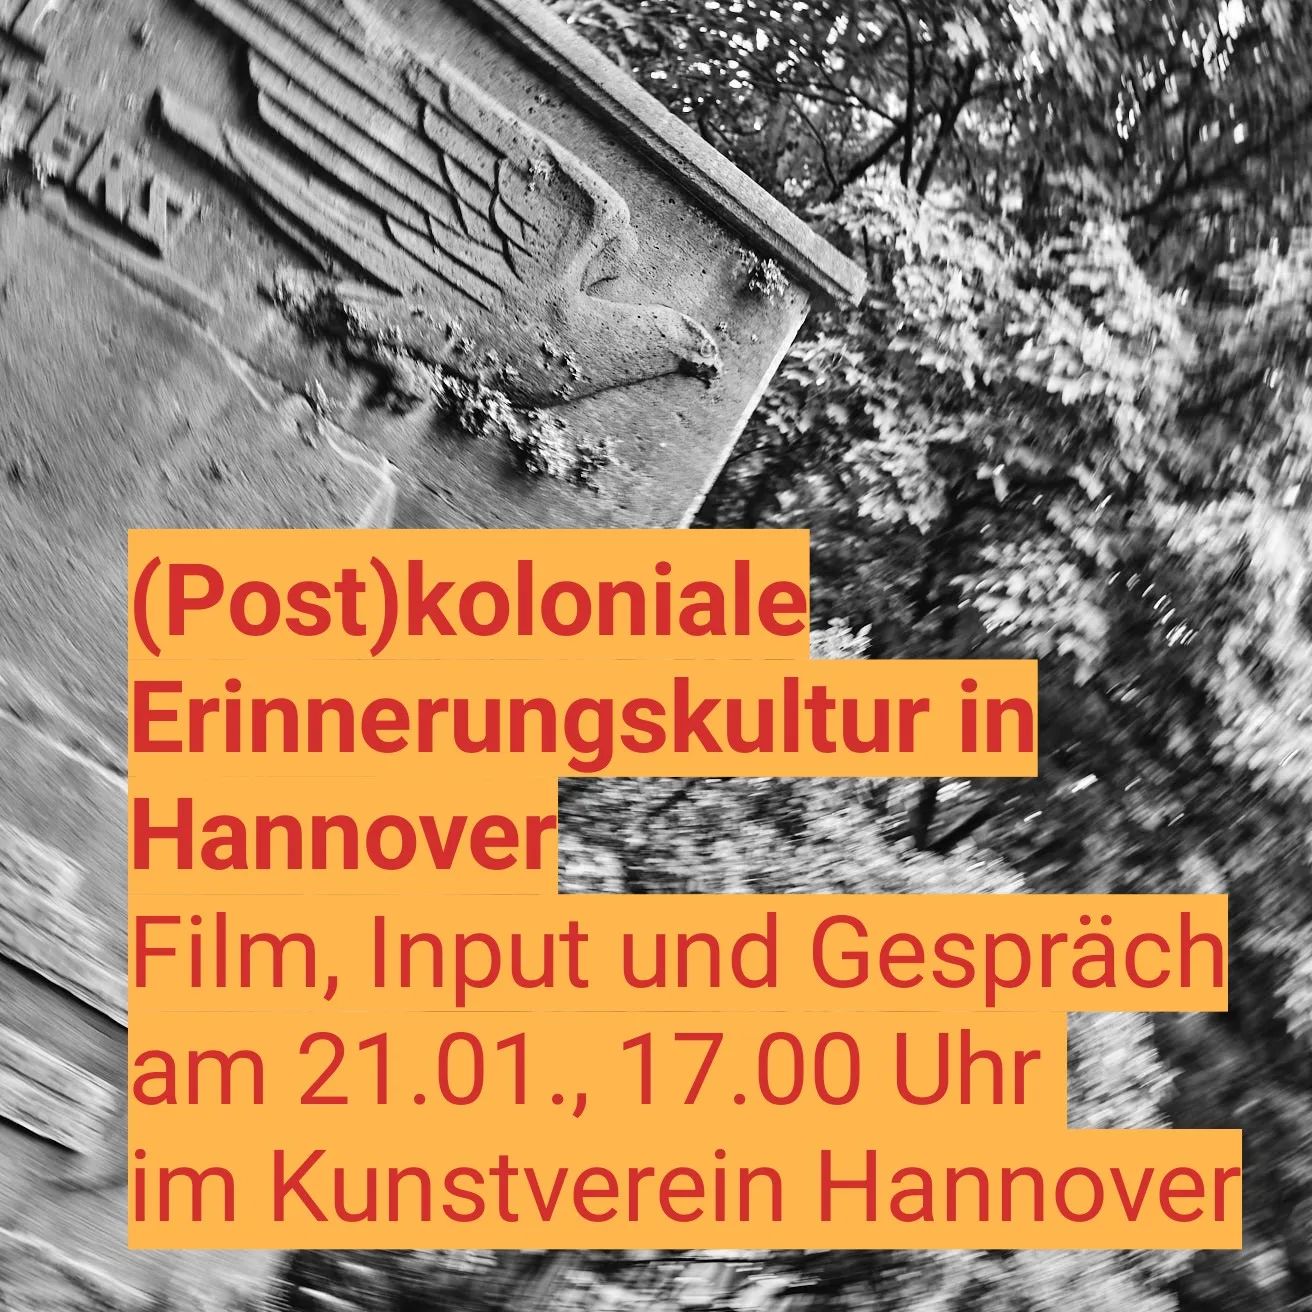 (Post)koloniale Erinnerungskultur in Hannover